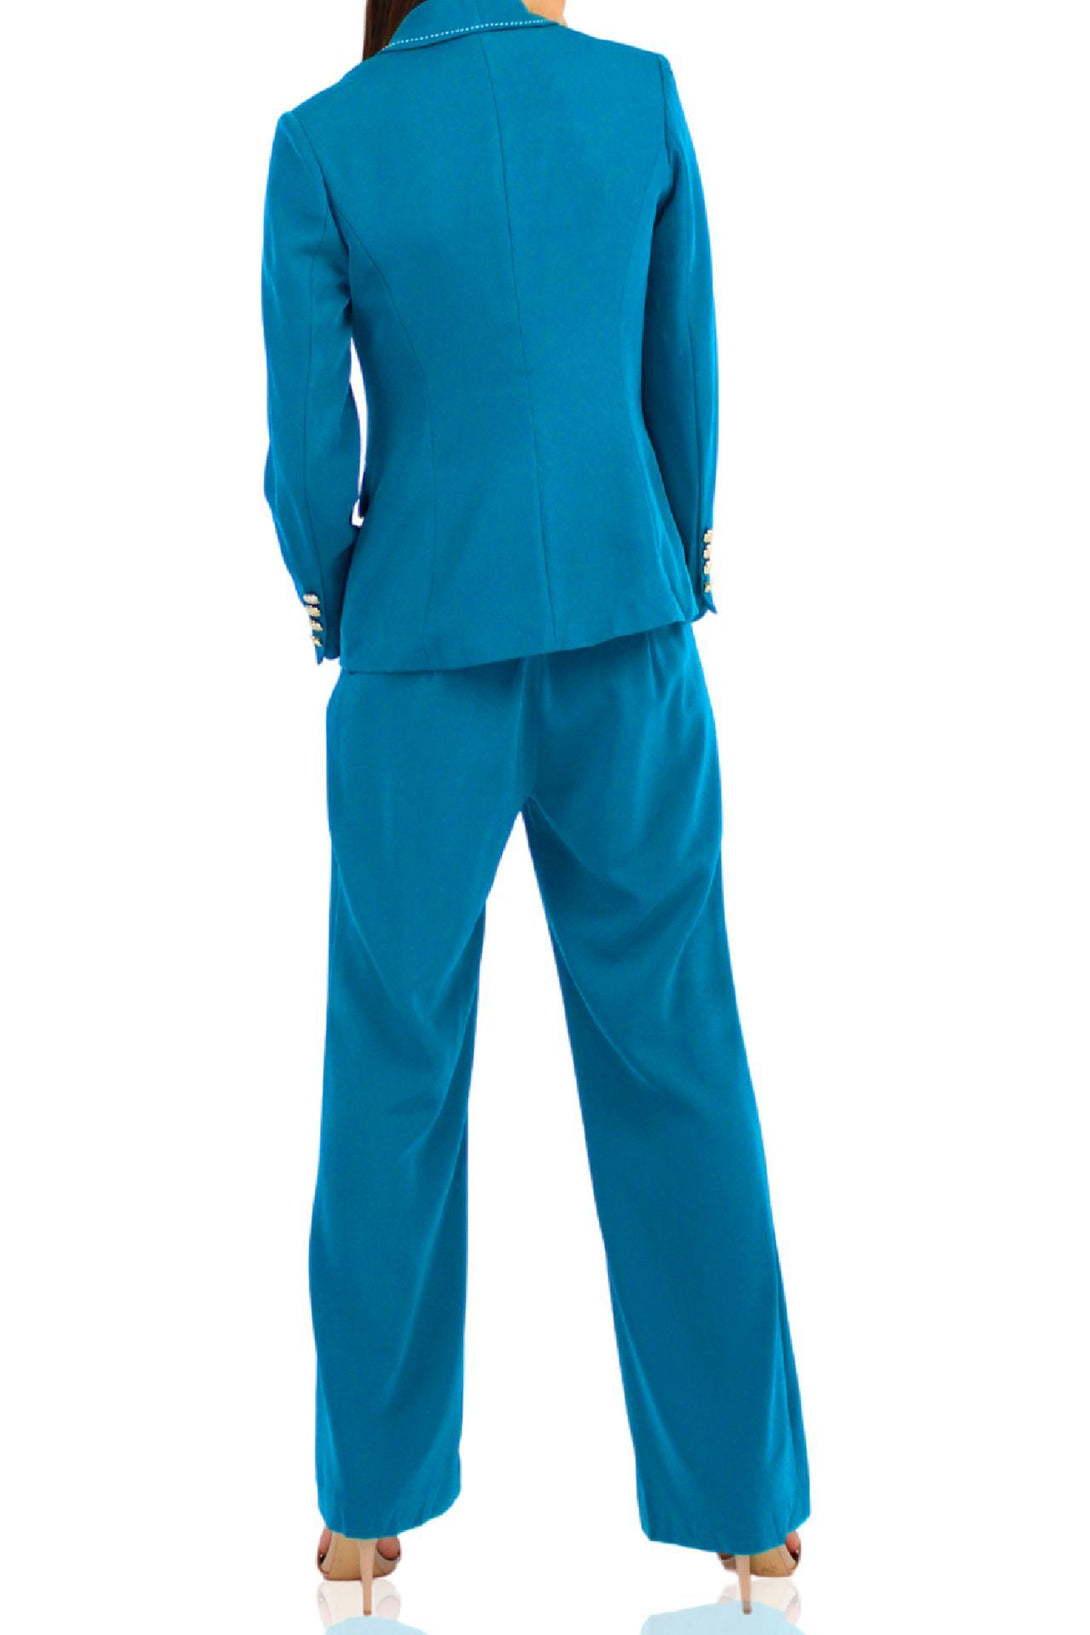 Designer-Blue-Matching-Suit-Set-By-Kyle-Richard